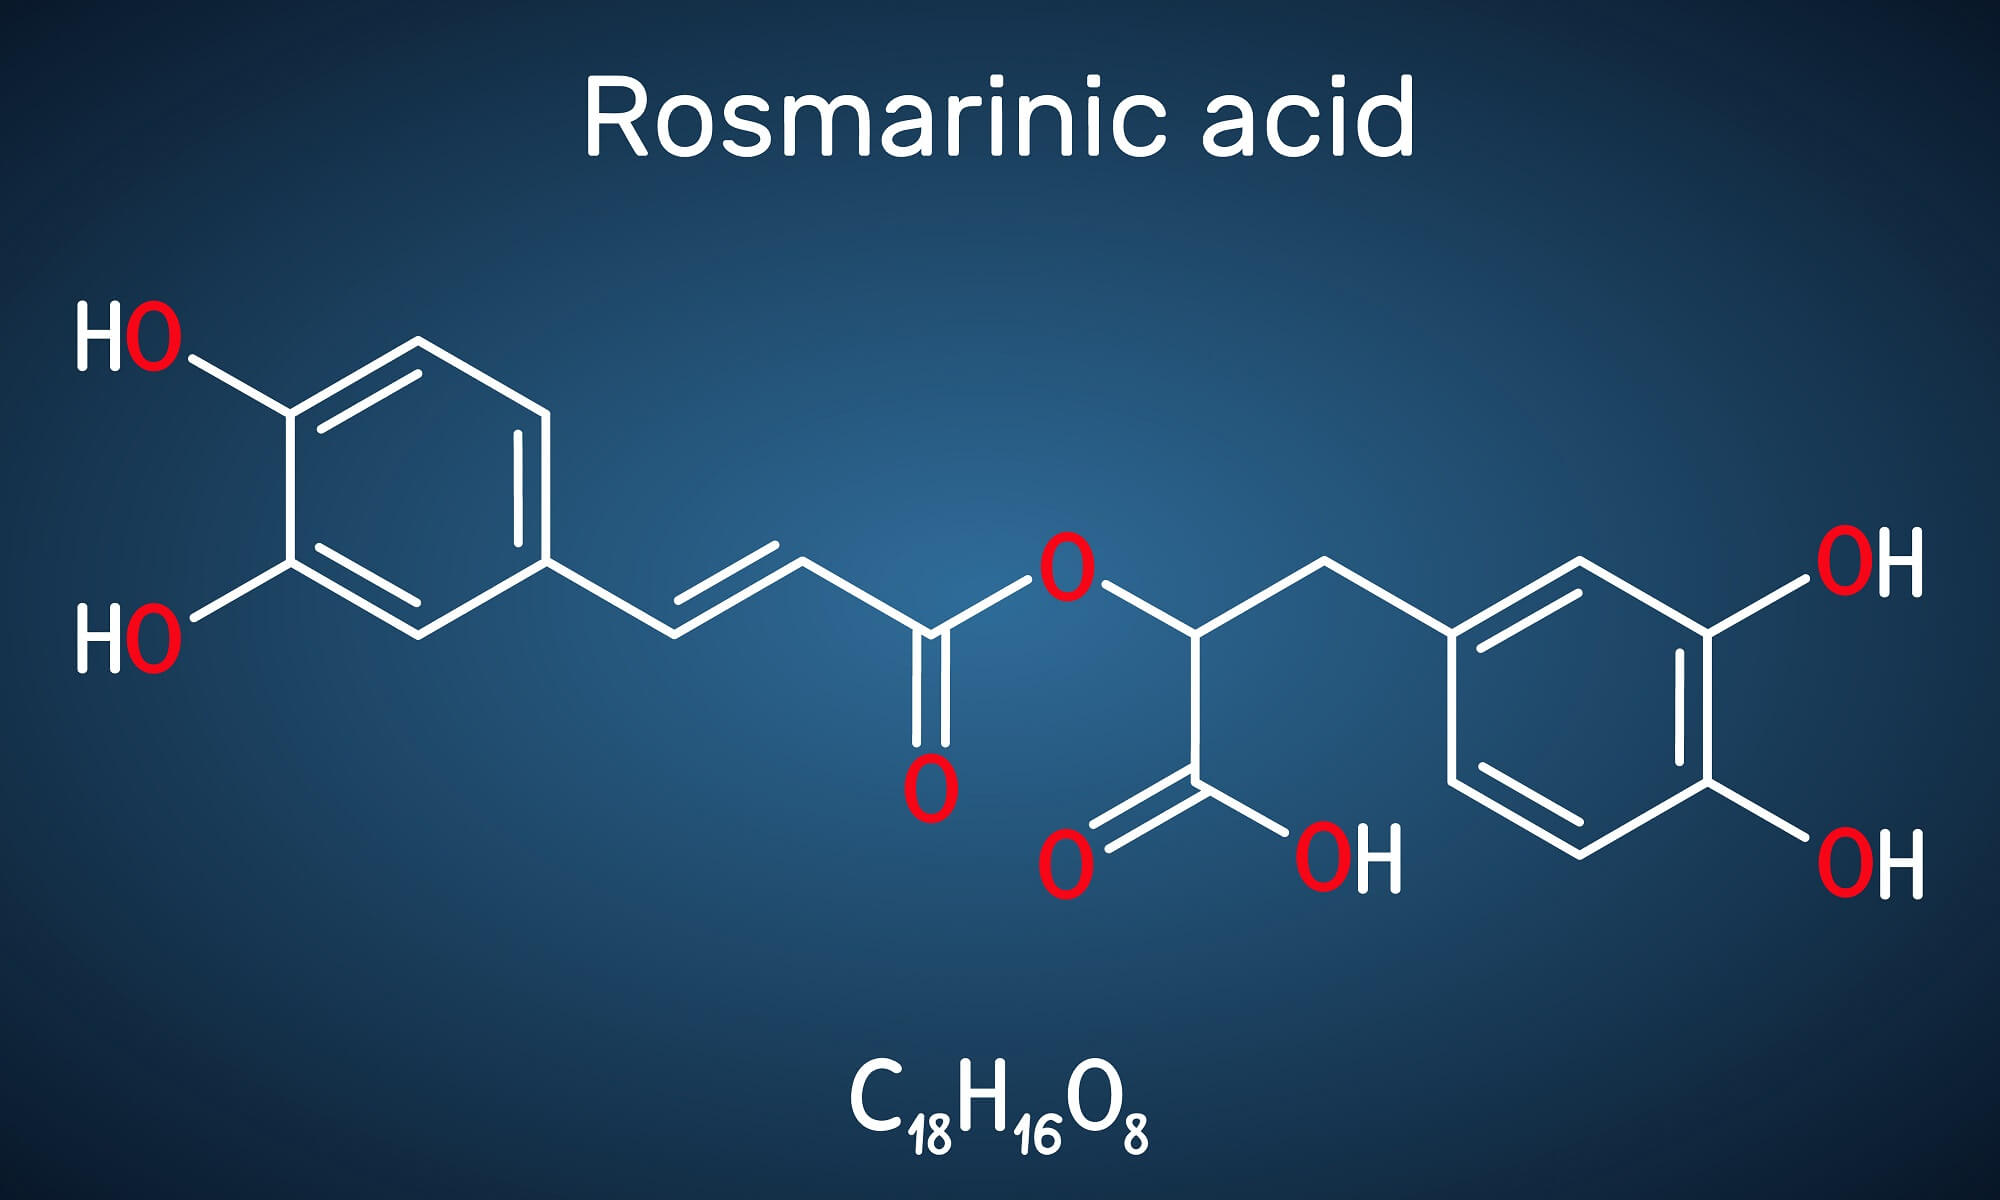 Rosmarinic acid, molecule. It is polyphenol, phenylpropanoid, monocarboxylic acid, non-steroidal anti-inflammatory drug